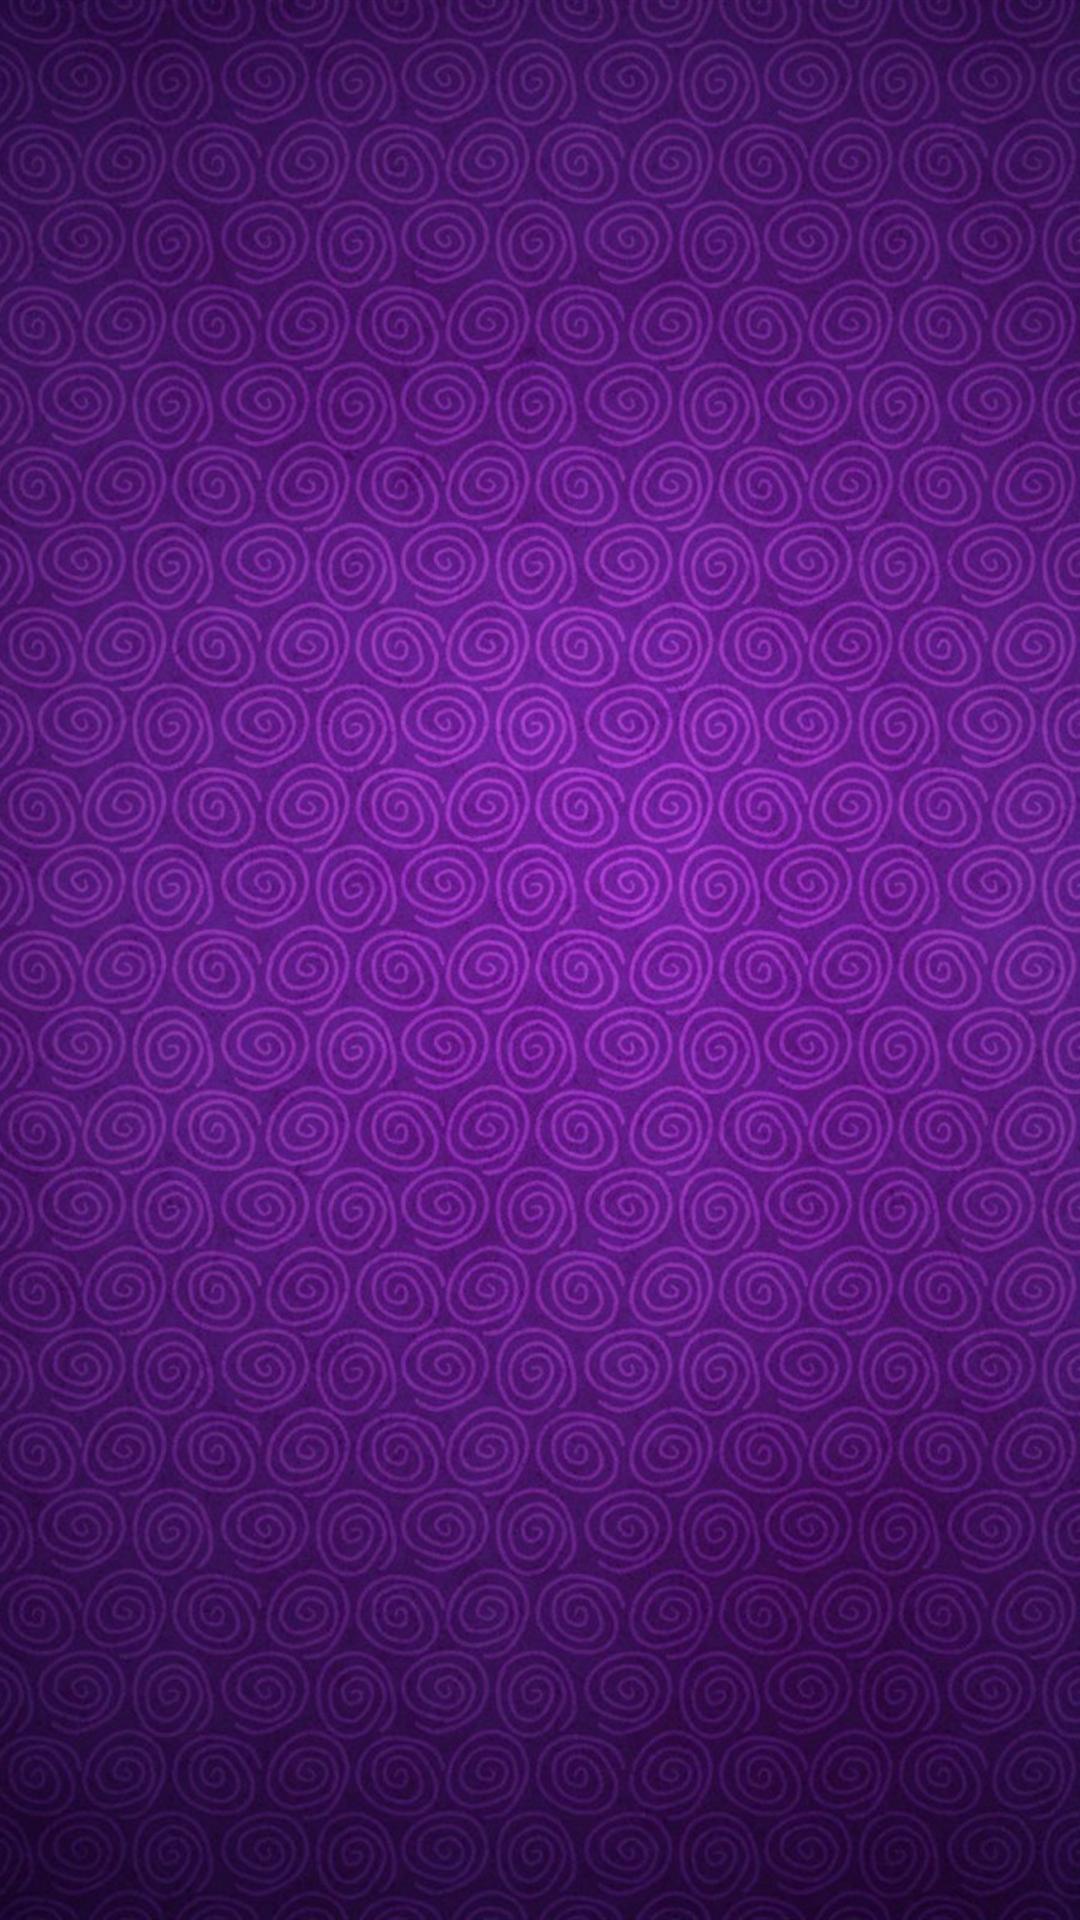 spinning twisting dark purple iphone 6 plus wallpapers